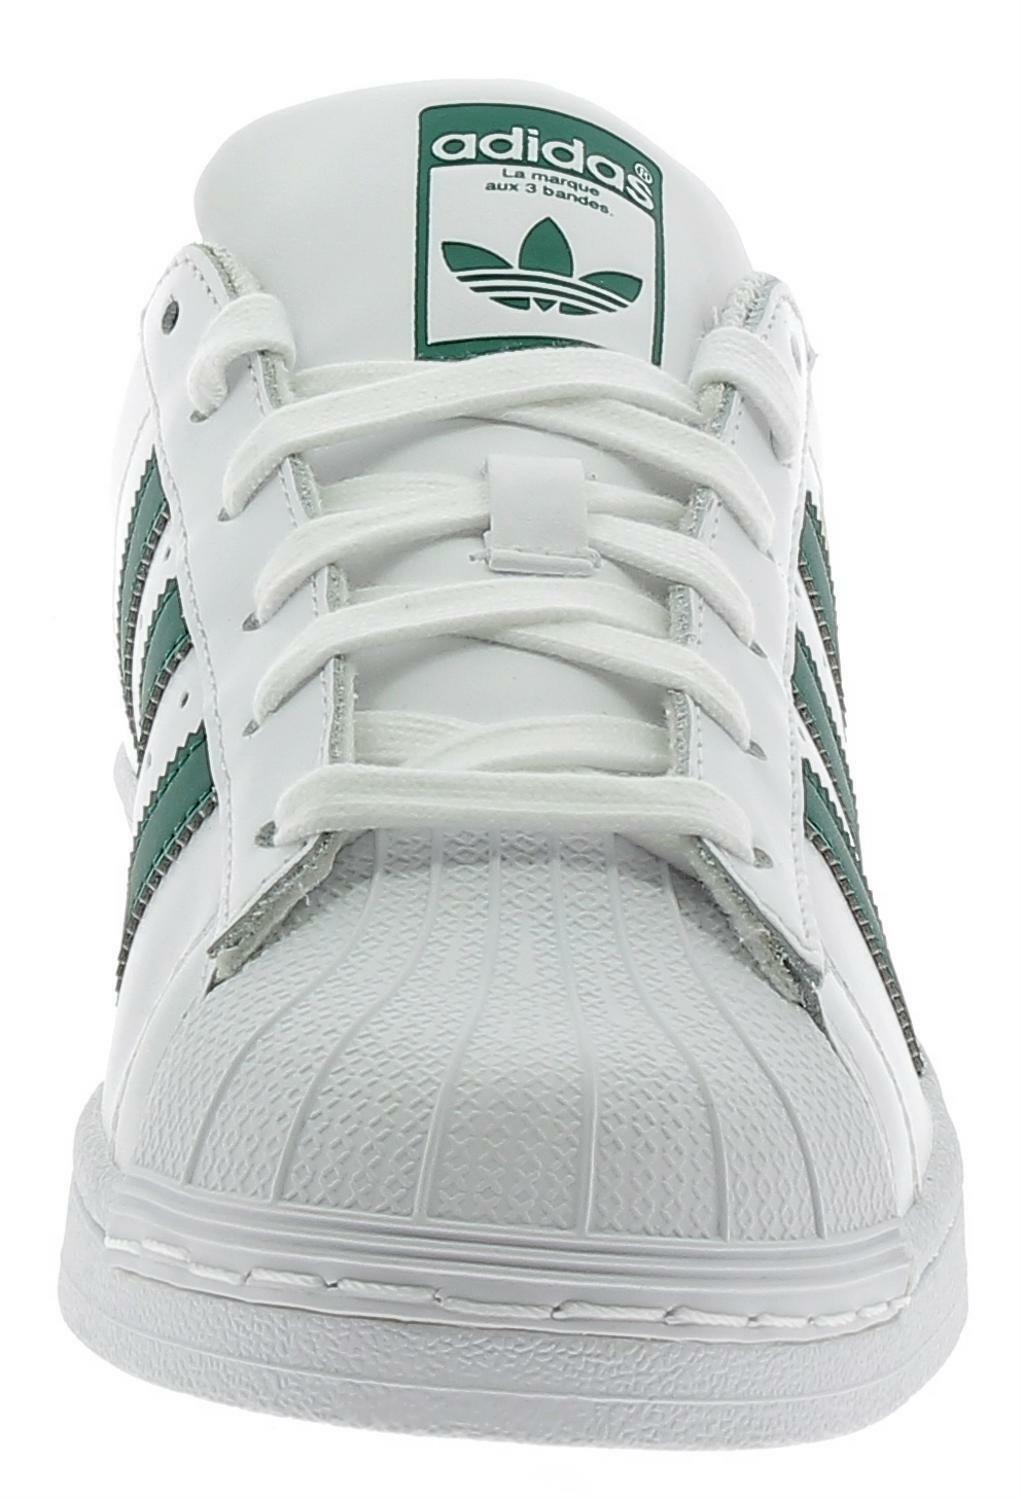 adidas adidas superstar scarpe sportive pelle bianche verdi